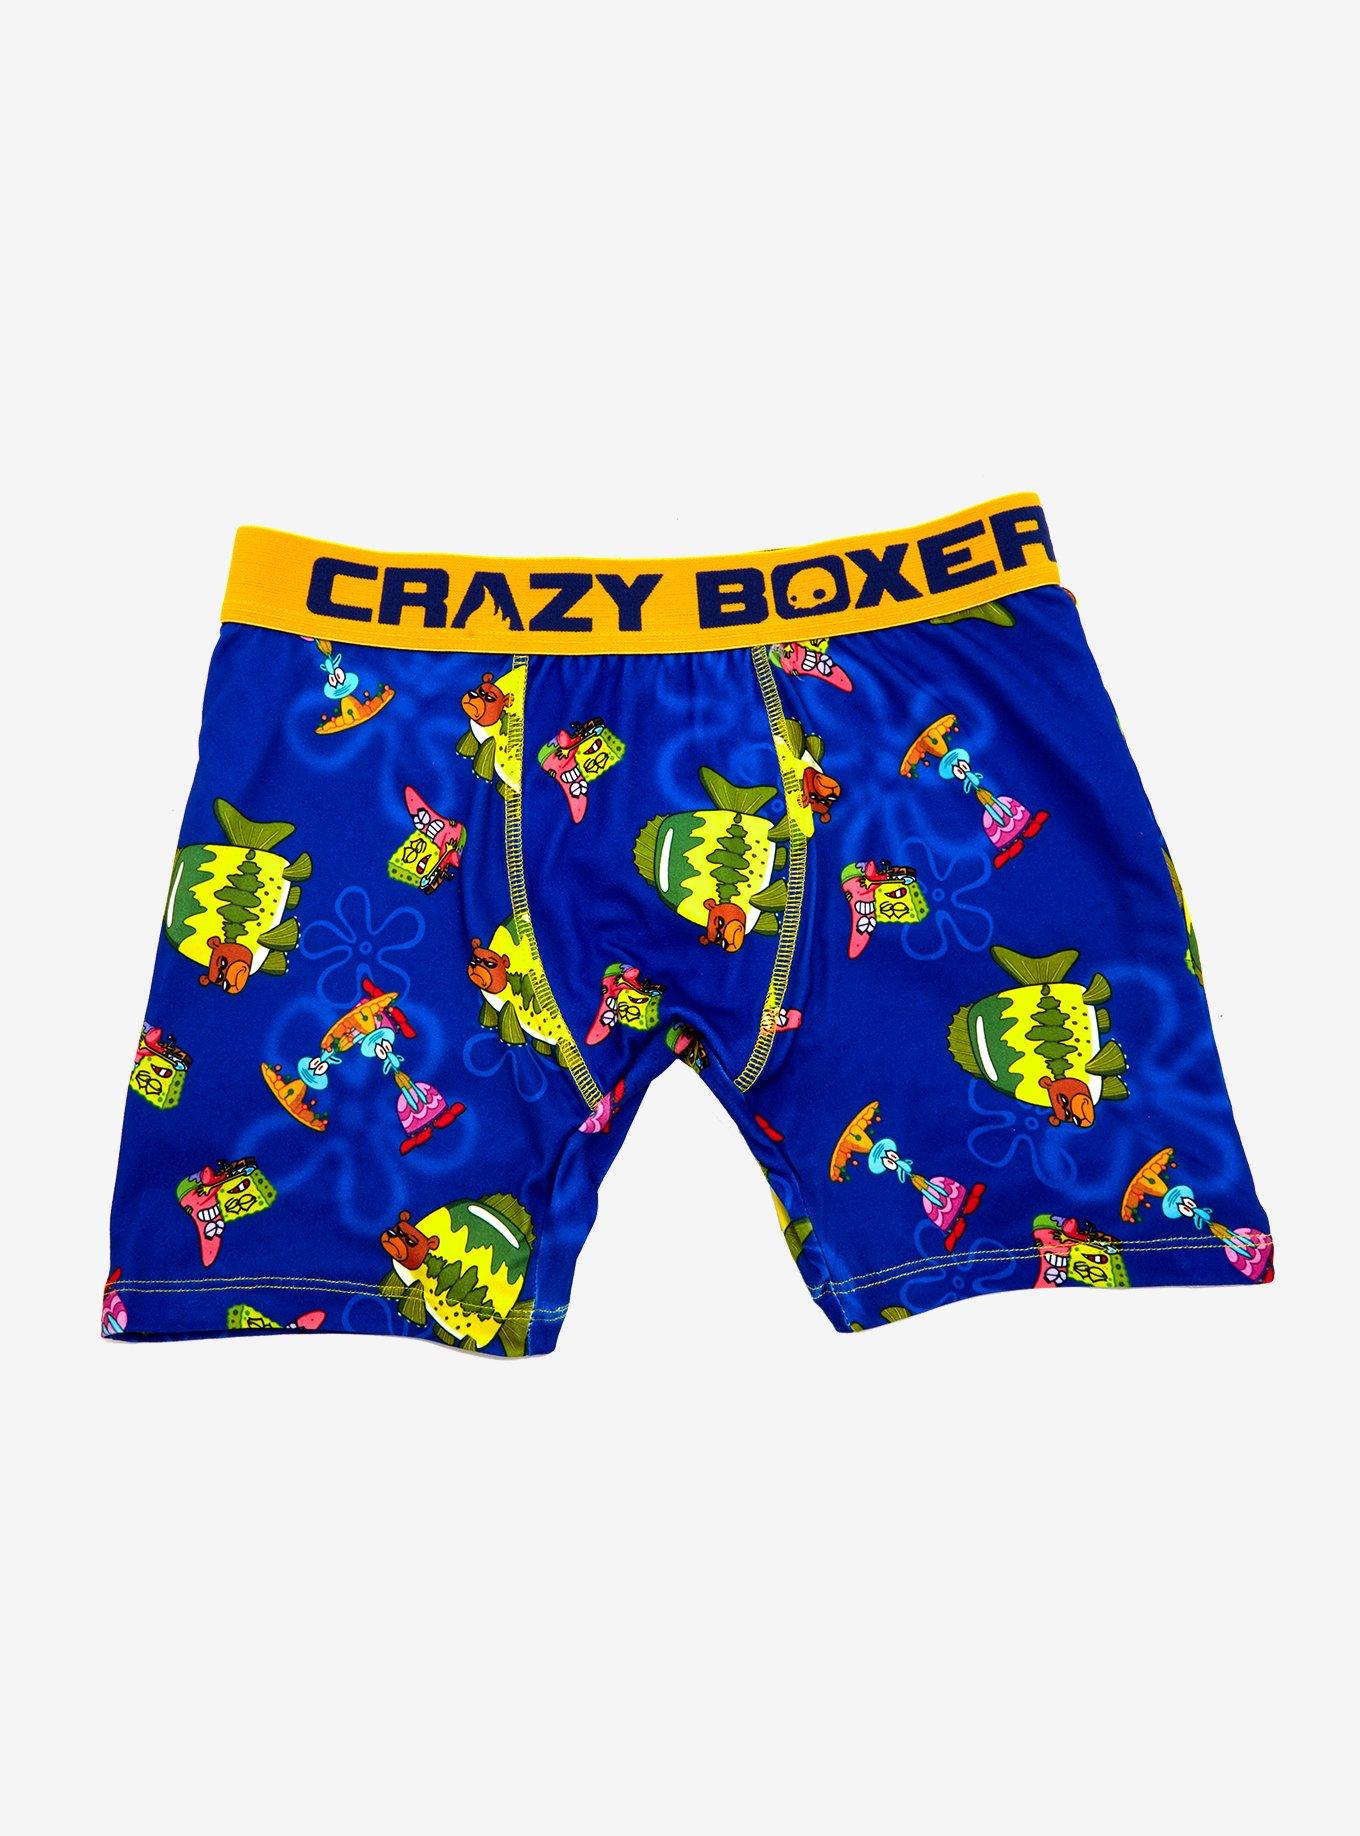 Crazy Boxers Spongebob Squarepants & Patrick Holiday 2-Packs